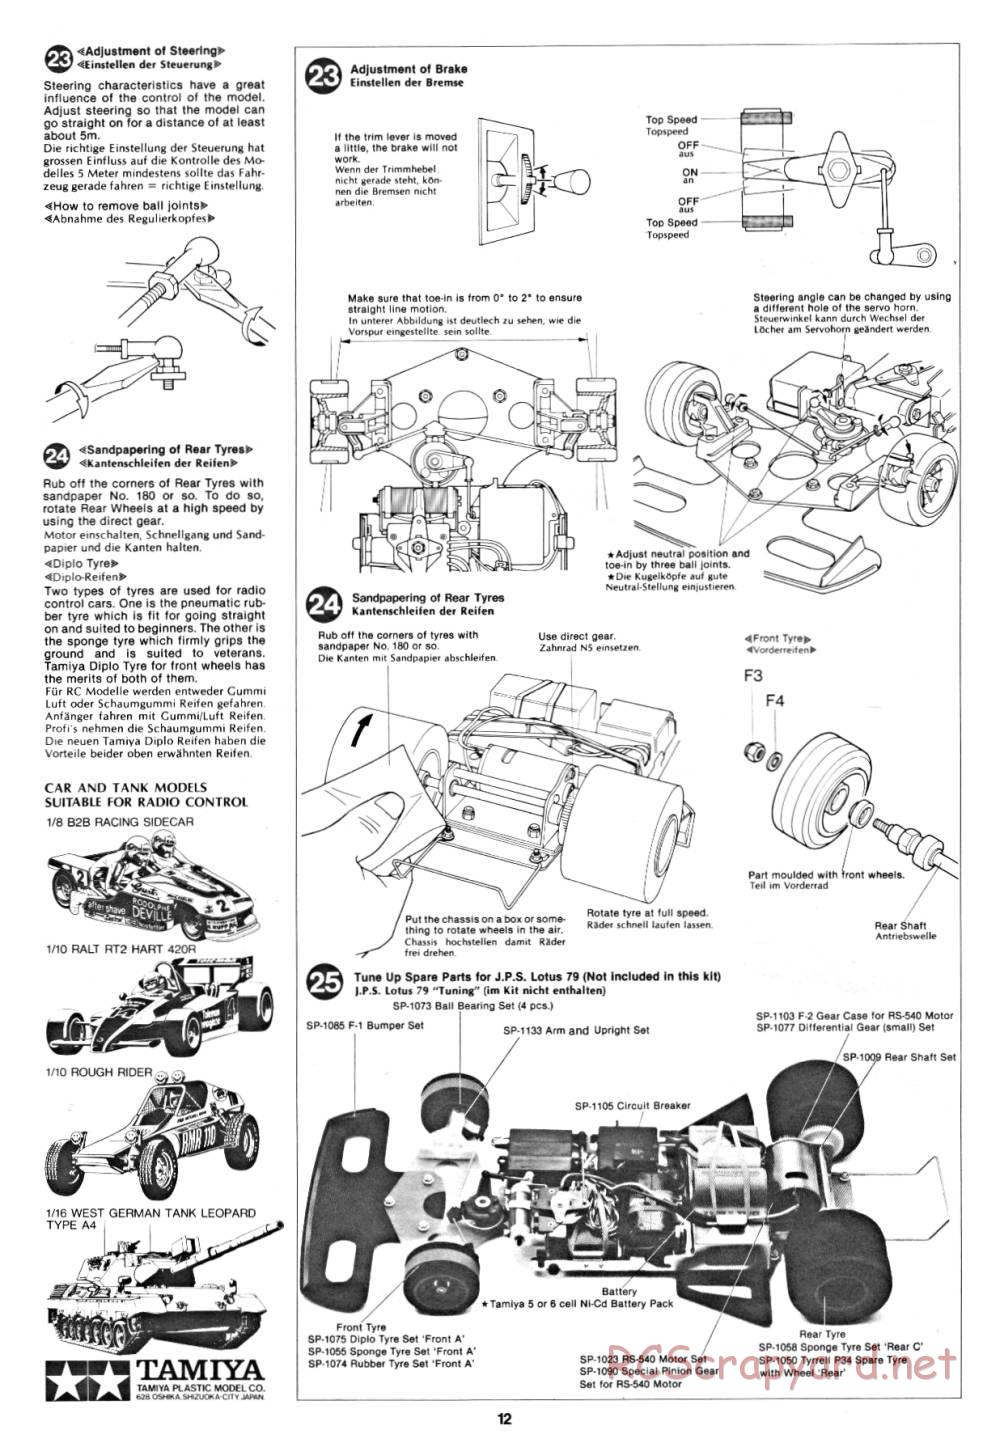 Tamiya - JPS Lotus 79 (CS) - 58020 - Manual - Page 12